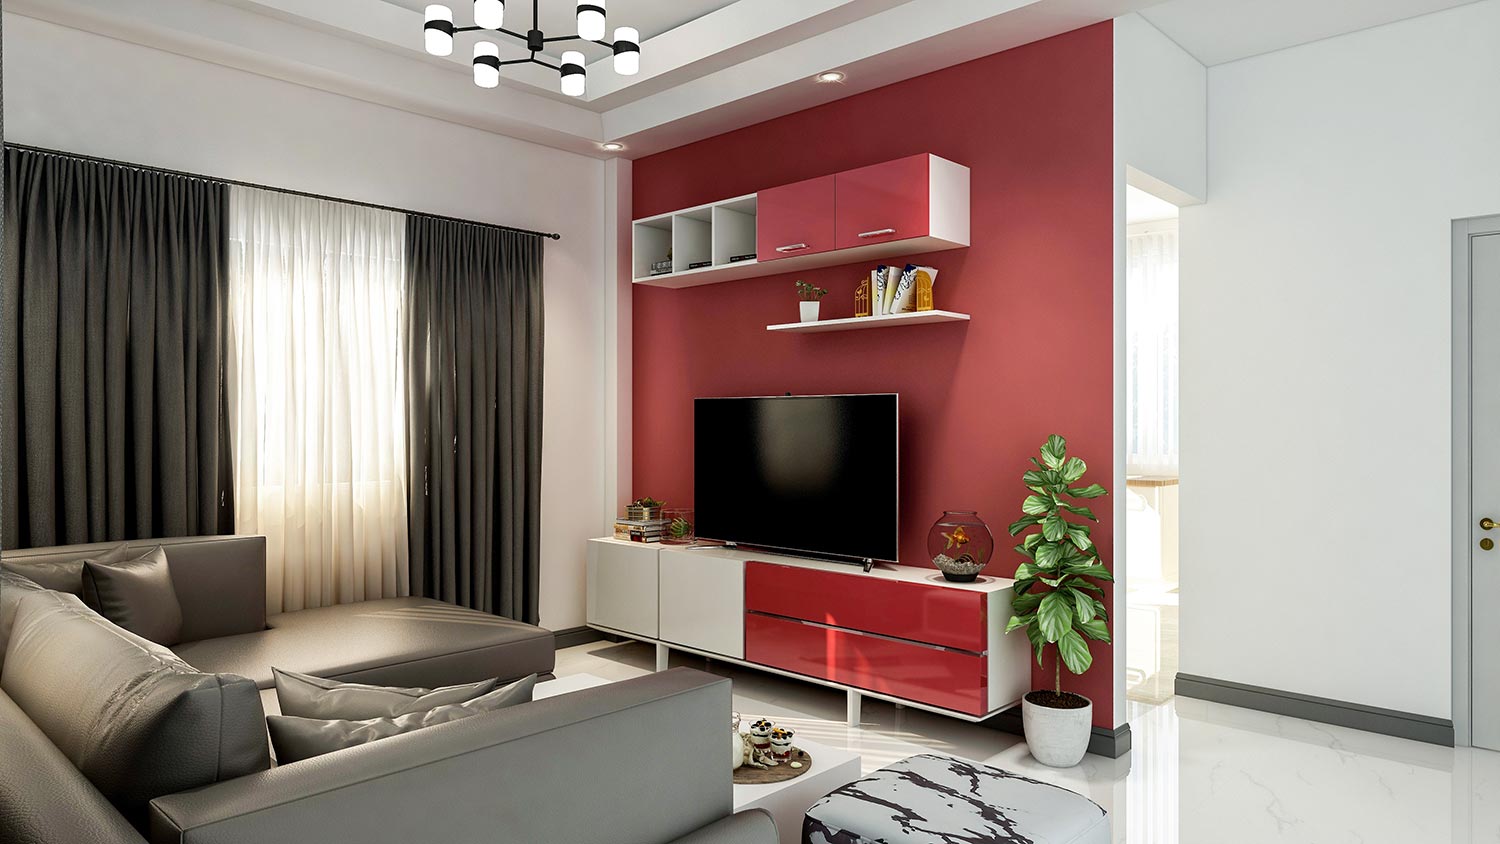 Small modern living room interior